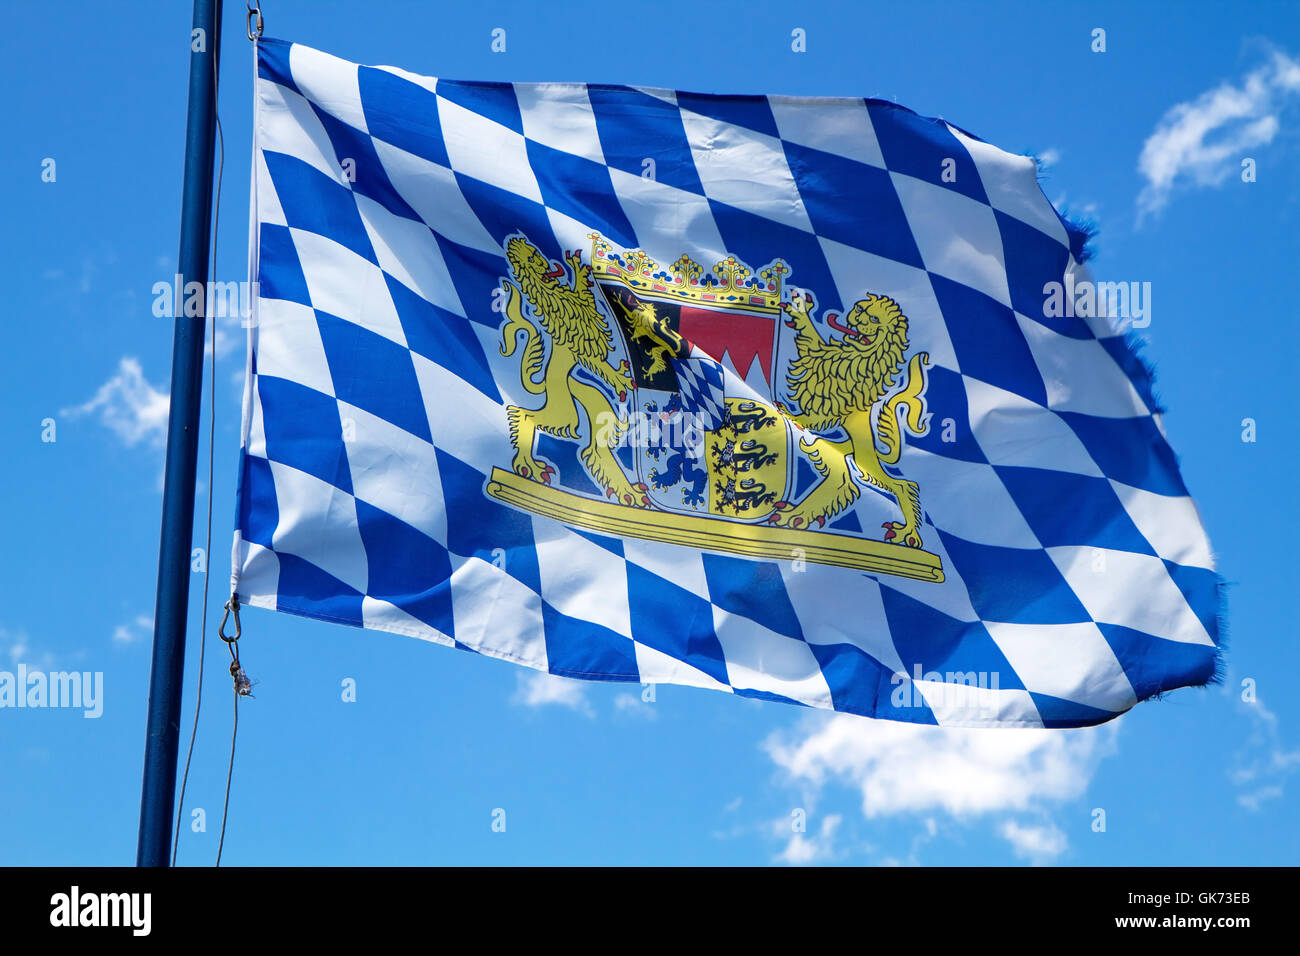 bayern-flagge - Lizenzfreies Bild #3216515